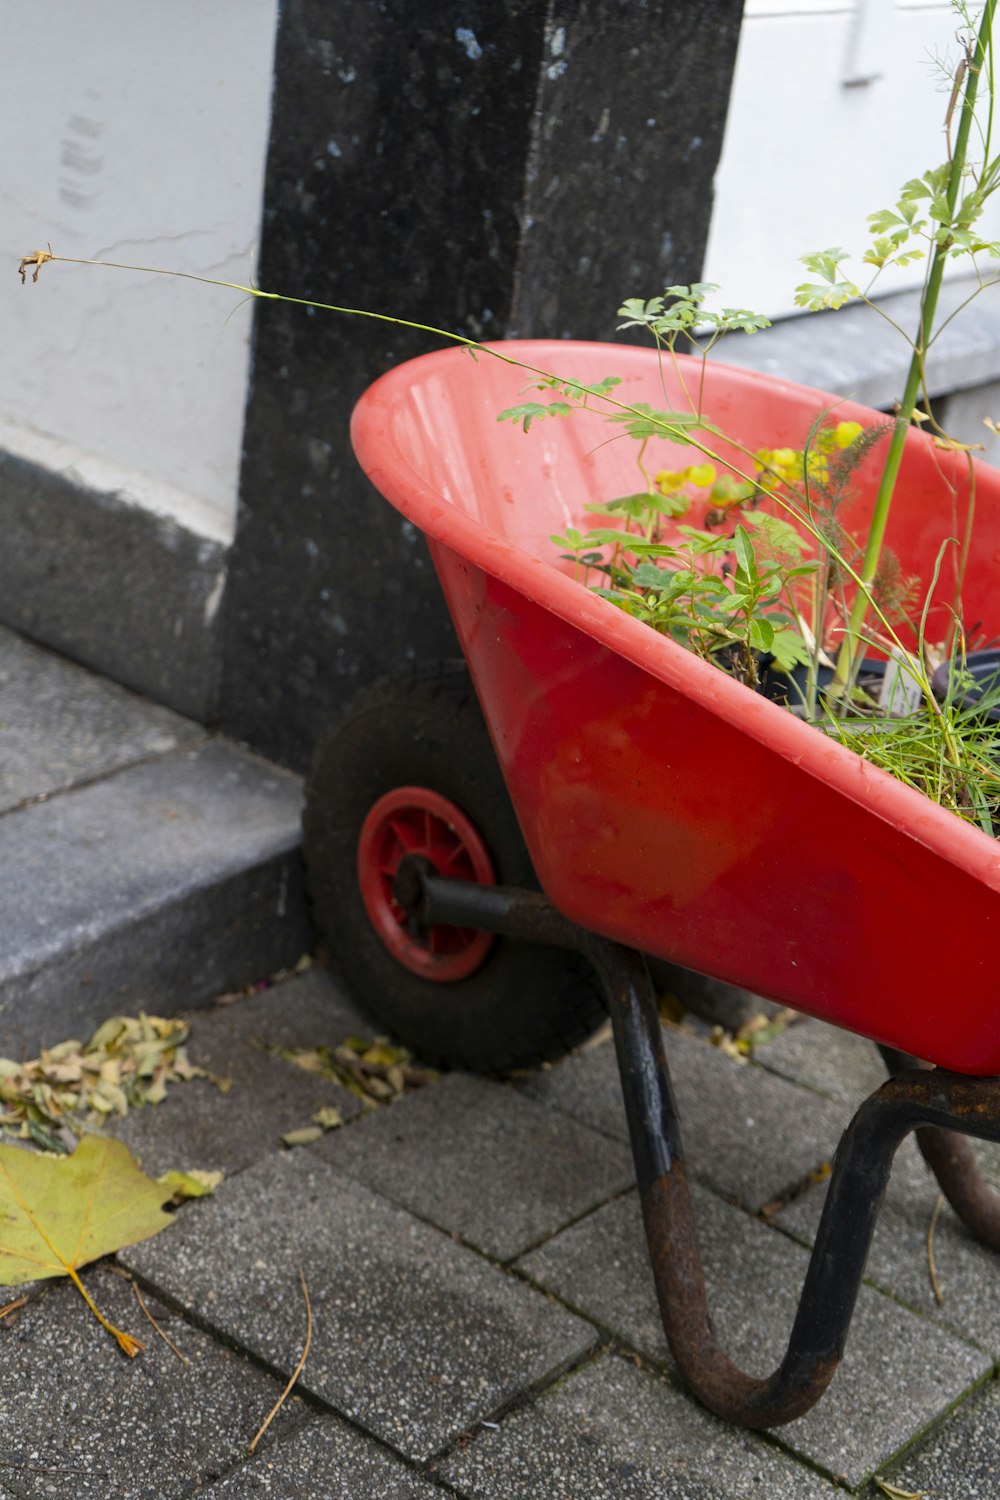 a red wheelbarrow filled with plants on a sidewalk